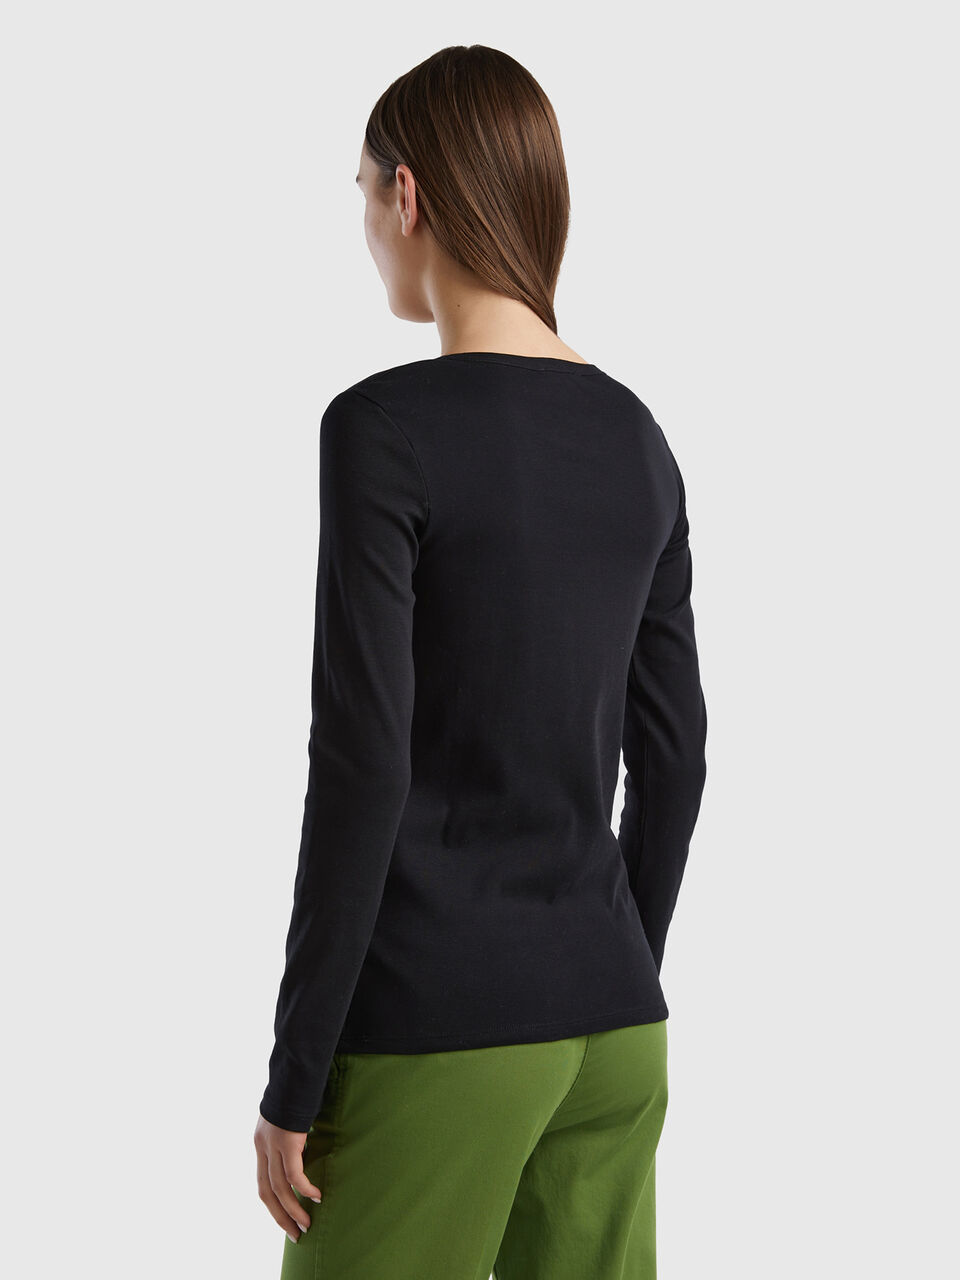 | Benetton t-shirt long - cotton sleeve Black 100% Black